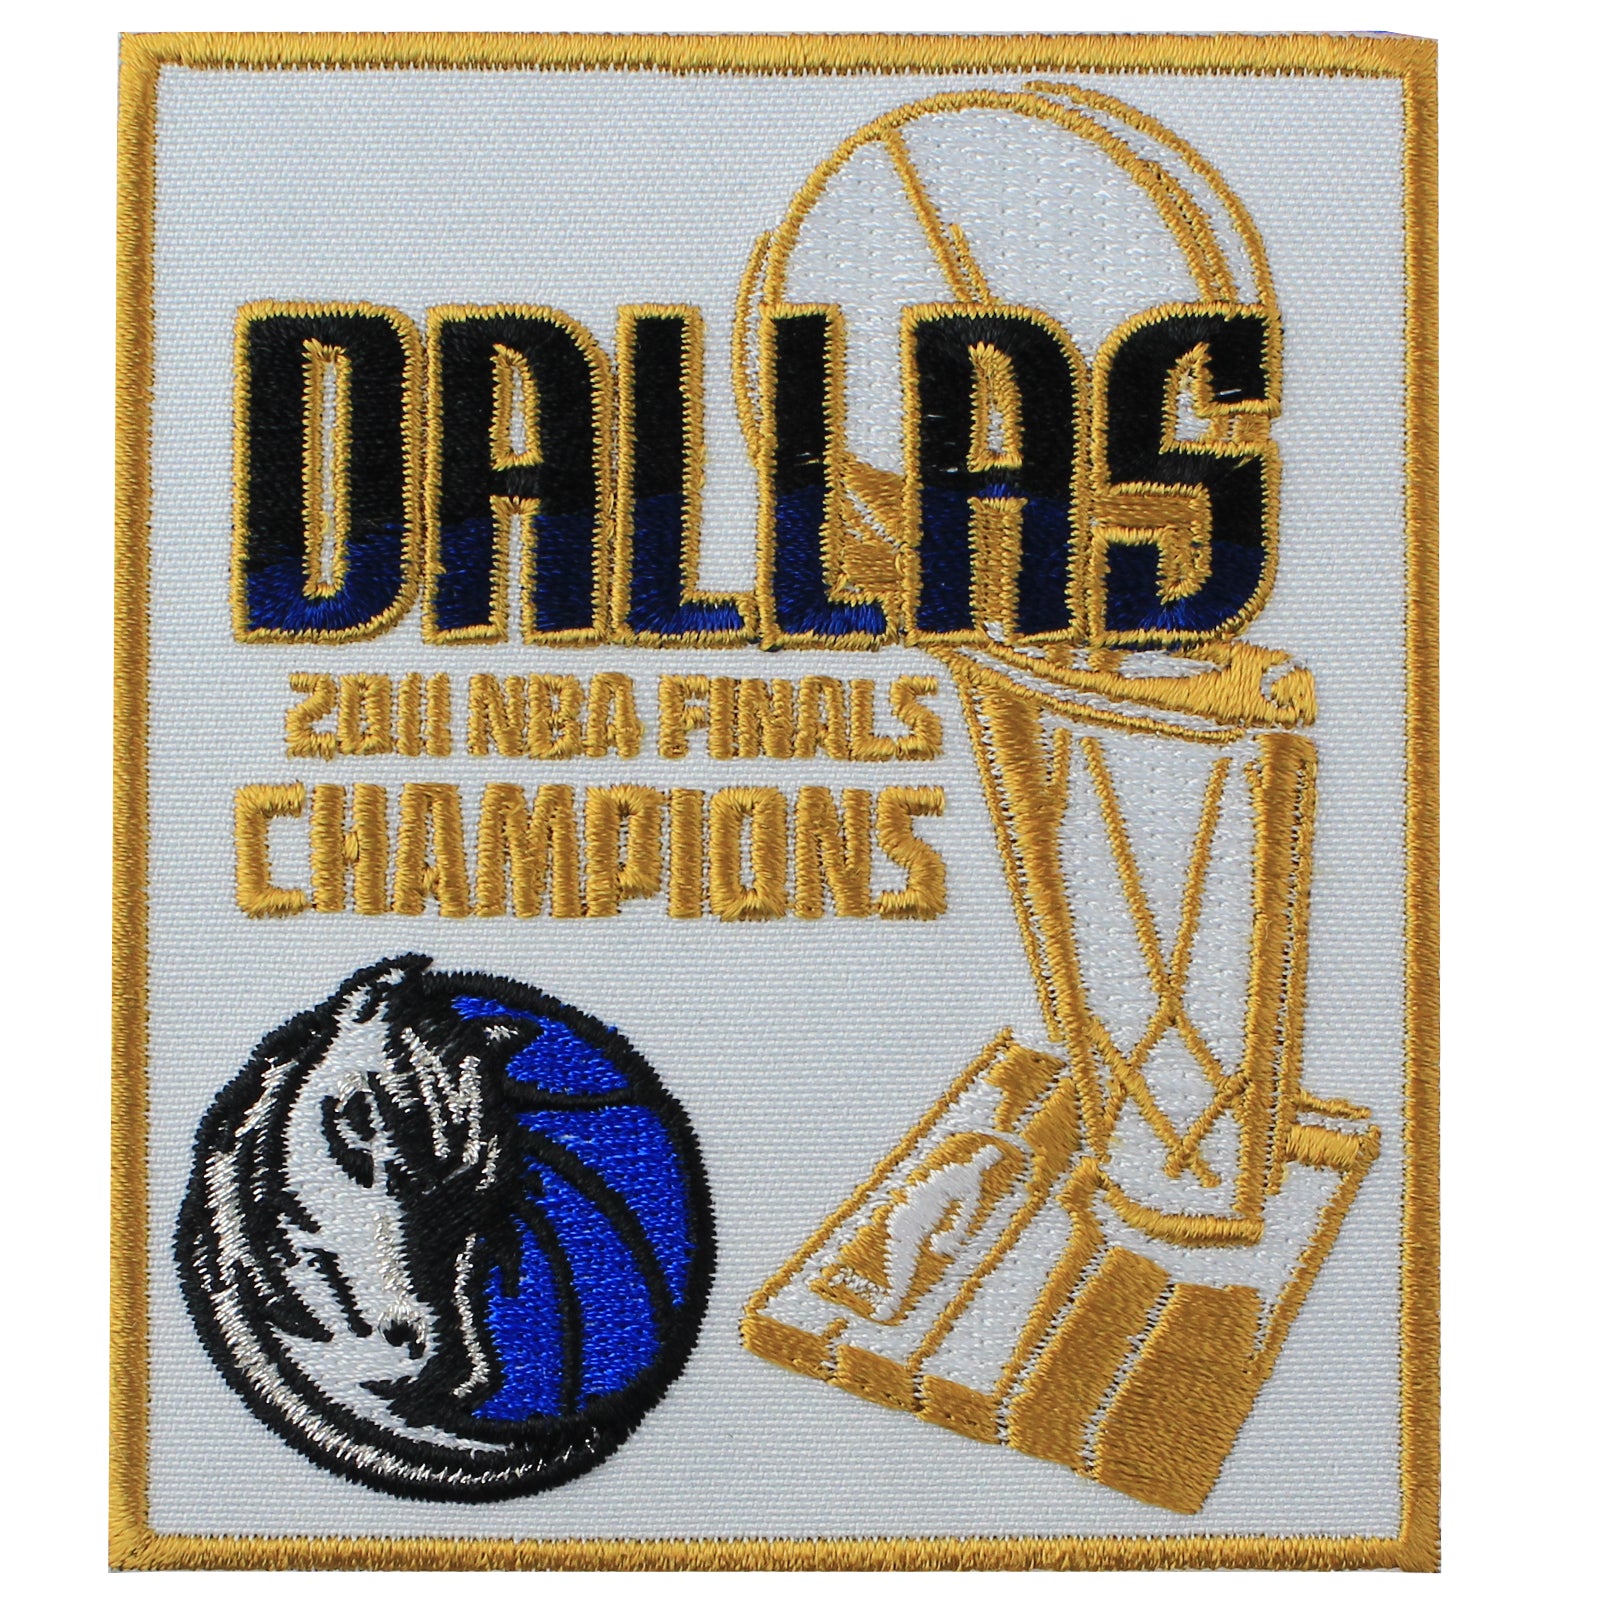 2011 NBA Champions Patch Dallas Mavericks – Patch Collection